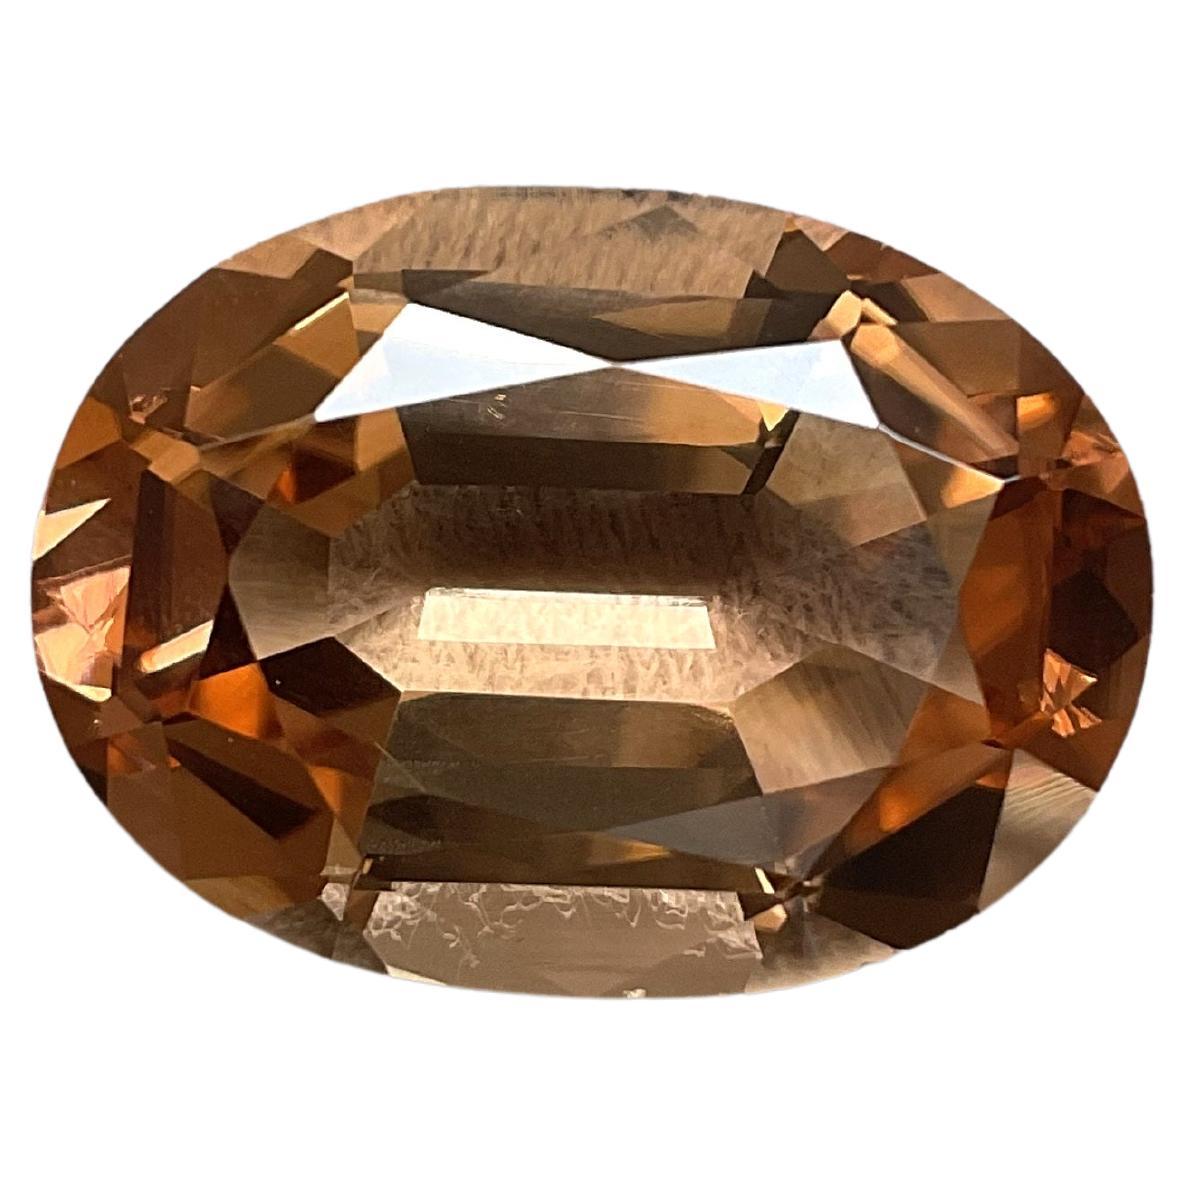 33.37 Carats Top Quality Tourmaline Oval Cut Stone Fine Jewelry Natural Gemstone

Pierre précieuse - Tourmaline
Poids - 33,37 ct
Taille -  25x18x11 mm
Forme - Pierre de taille ovale